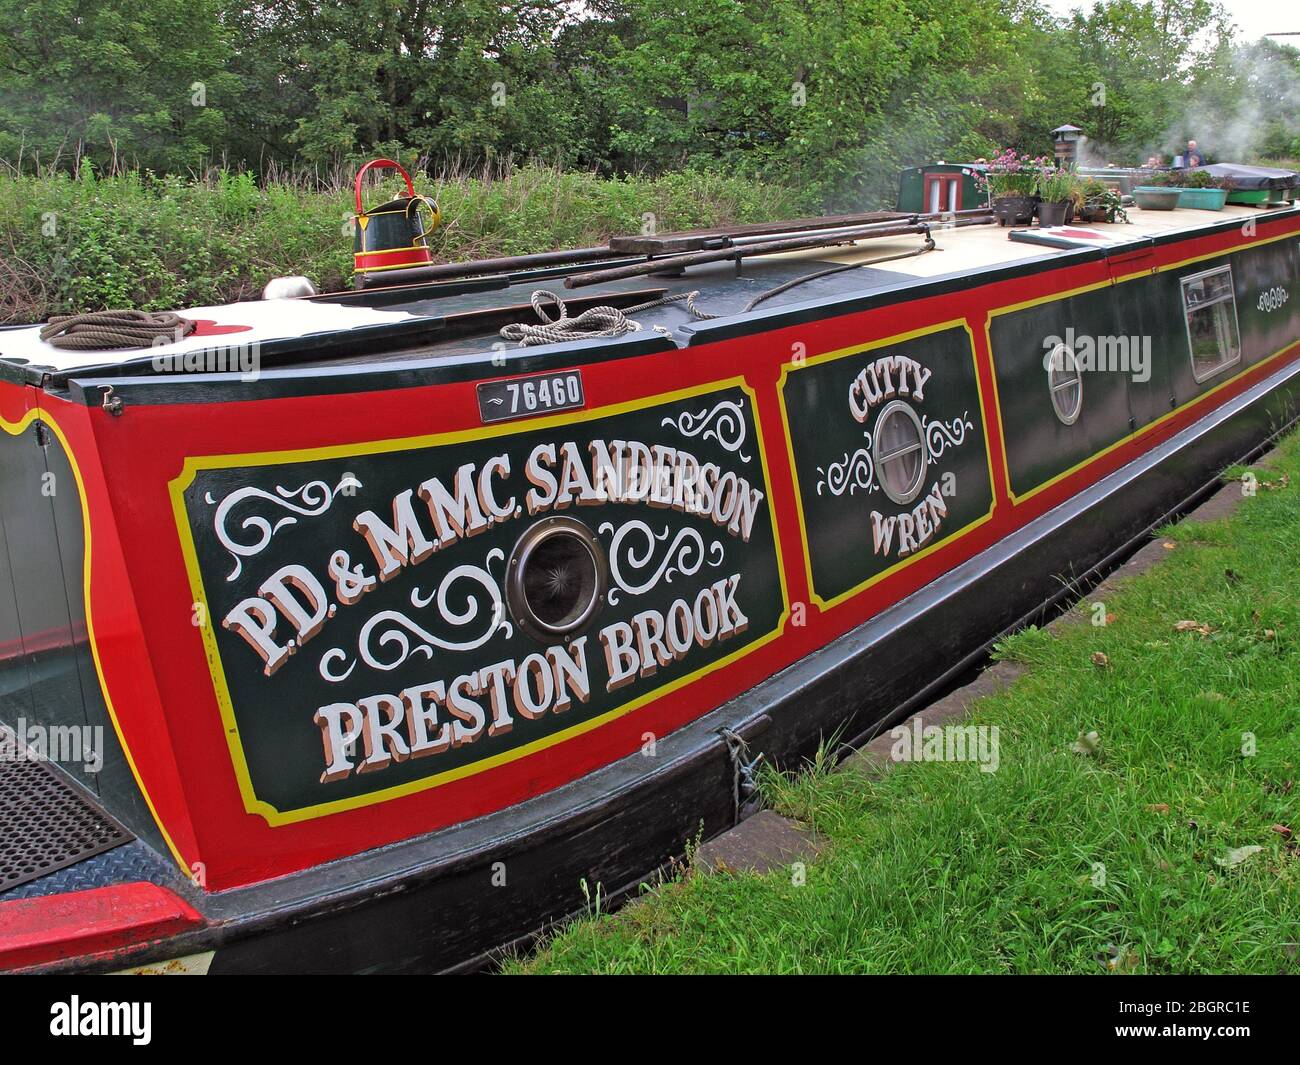 PD MMC Sanderson Preston Brook Cutty Wren,Waterway Canal boat,narrowboat,England,Great Britain,UK Stock Photo